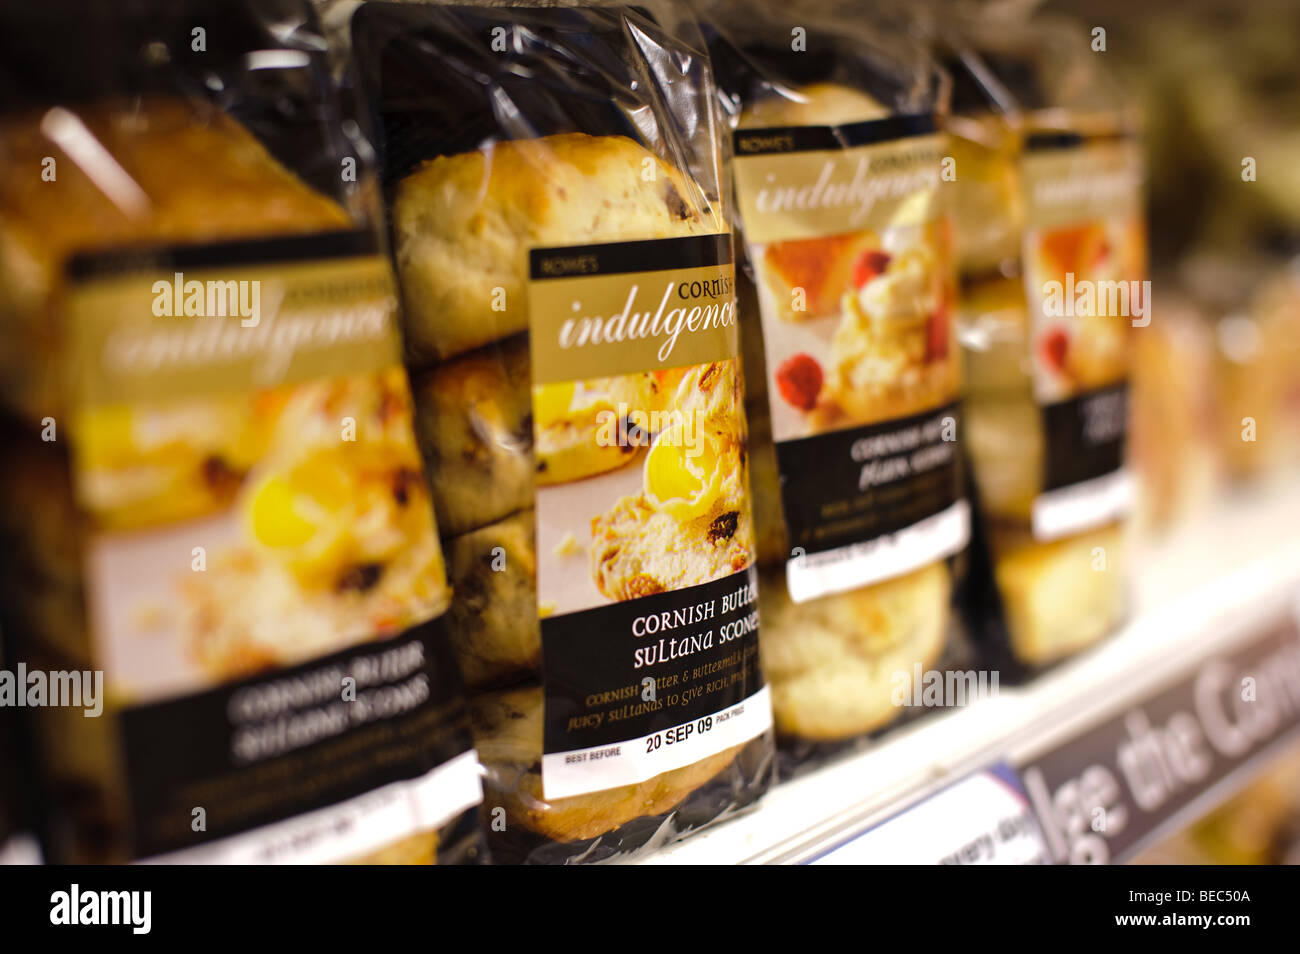 Cornish indulgence products in a supermarket Stock Photo